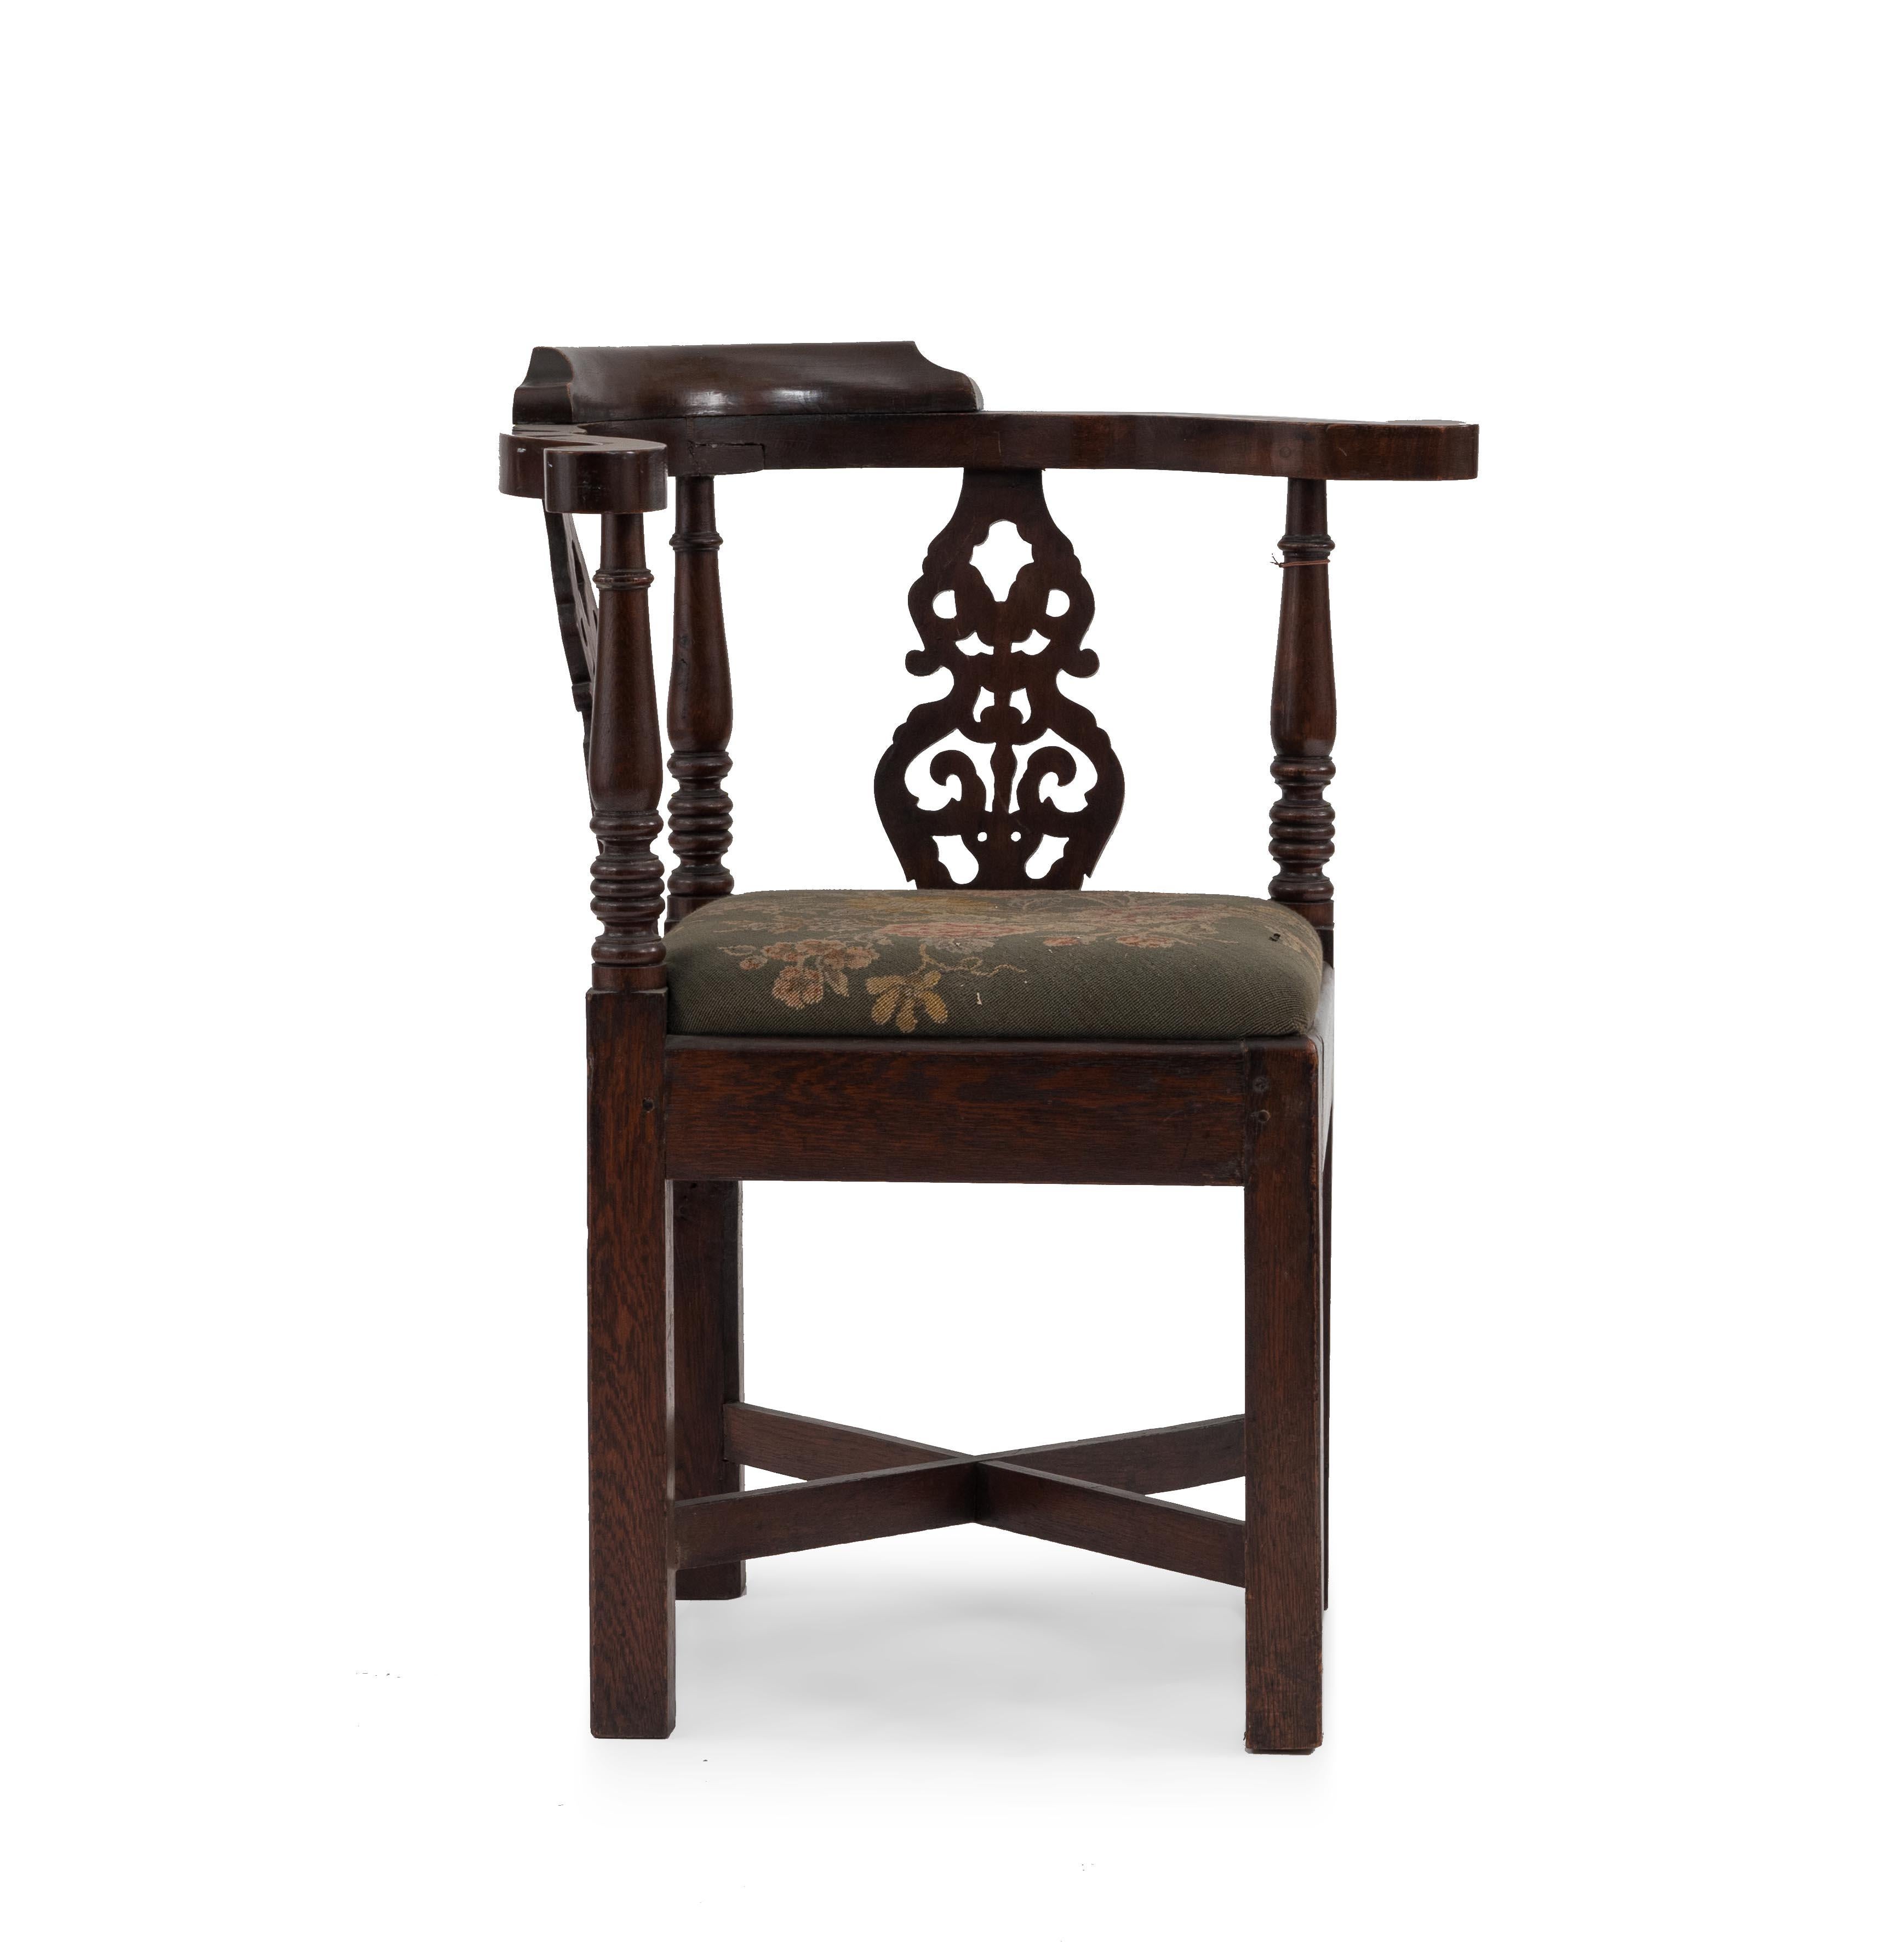 English Georgian-style (19th Century) oak corner armchair with filigree splat back and needlepoint seat.
